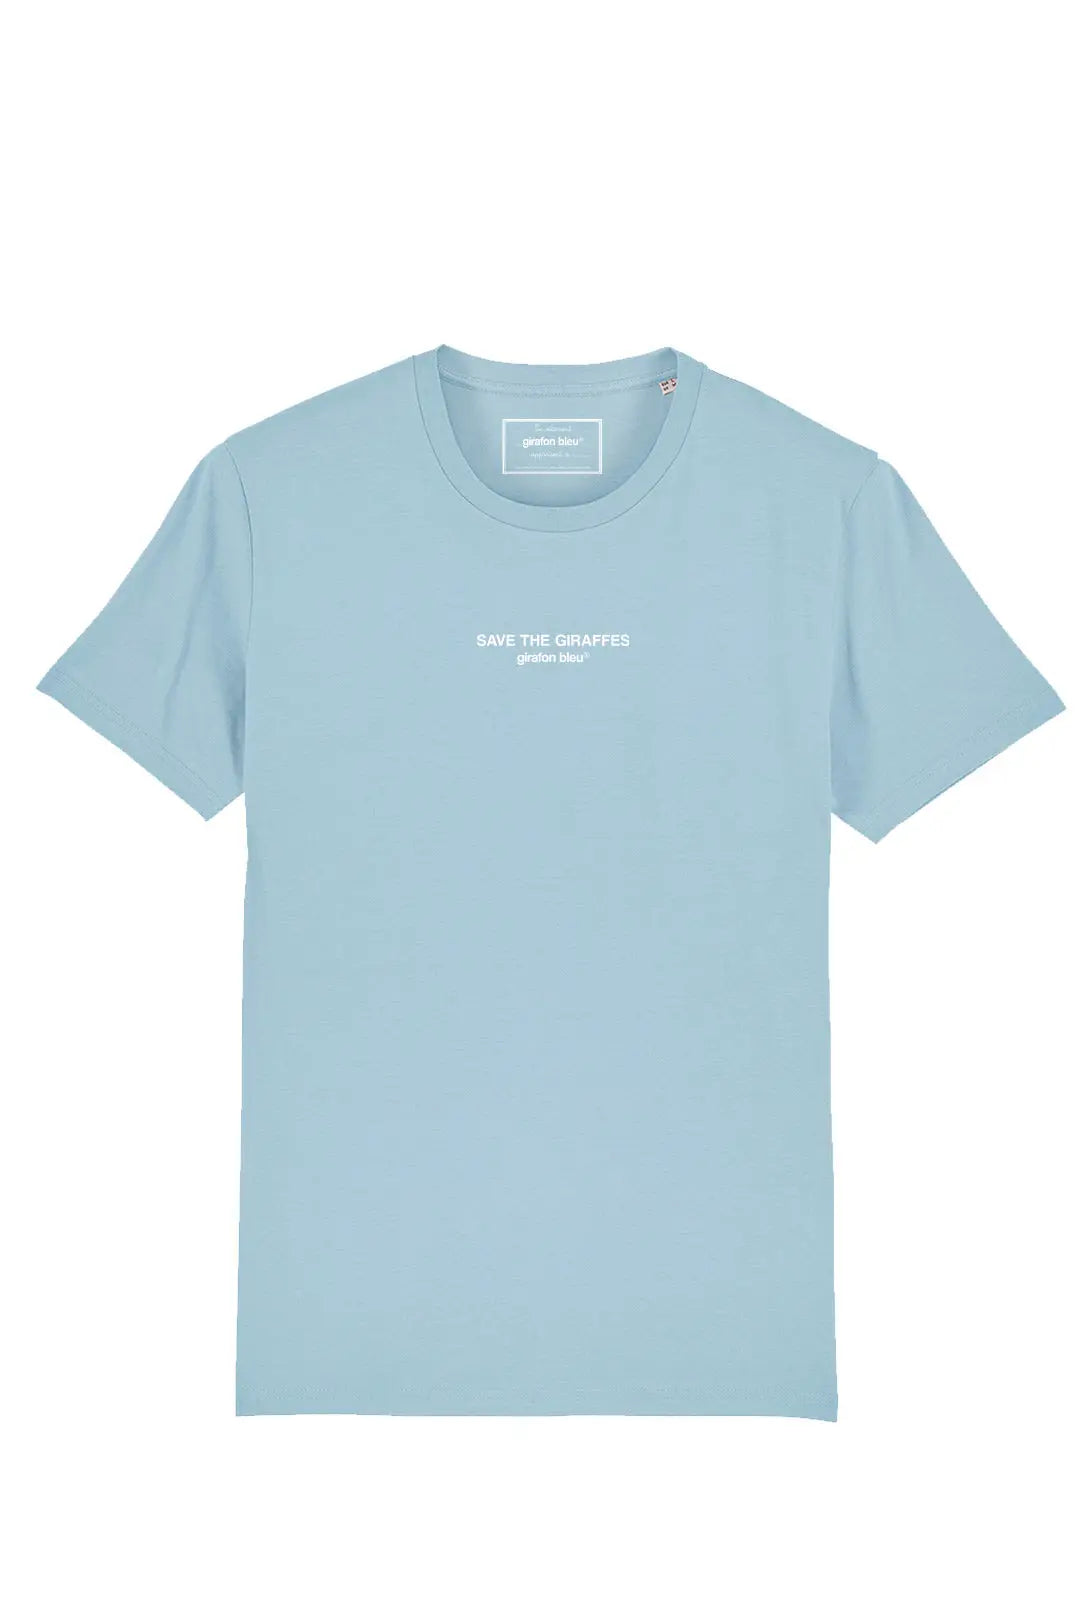 Organic cotton "Save the giraffes" t-shirt - sky blue